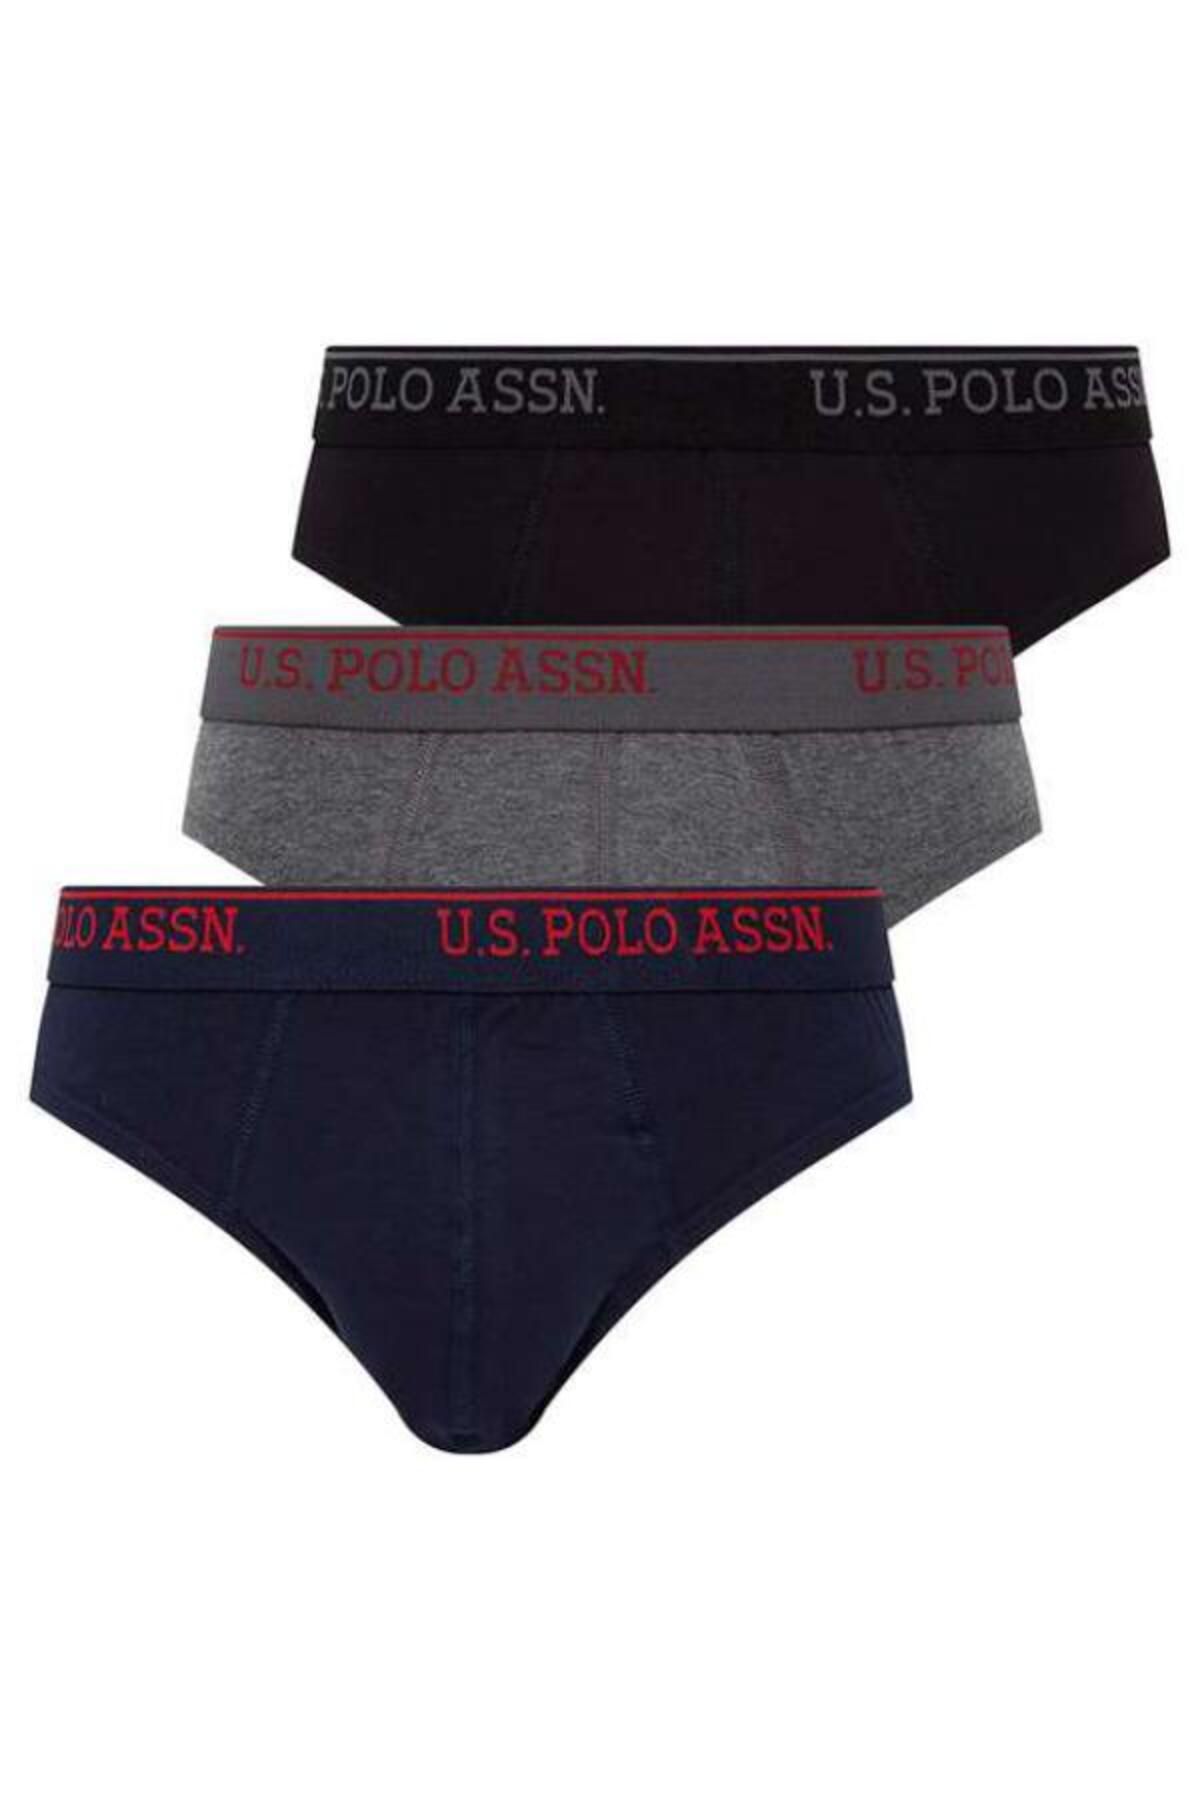 U.S. Polo Assn. Erkek 3'lü Slip Külot Çok Renkli  -  BRY2AE287.835.994